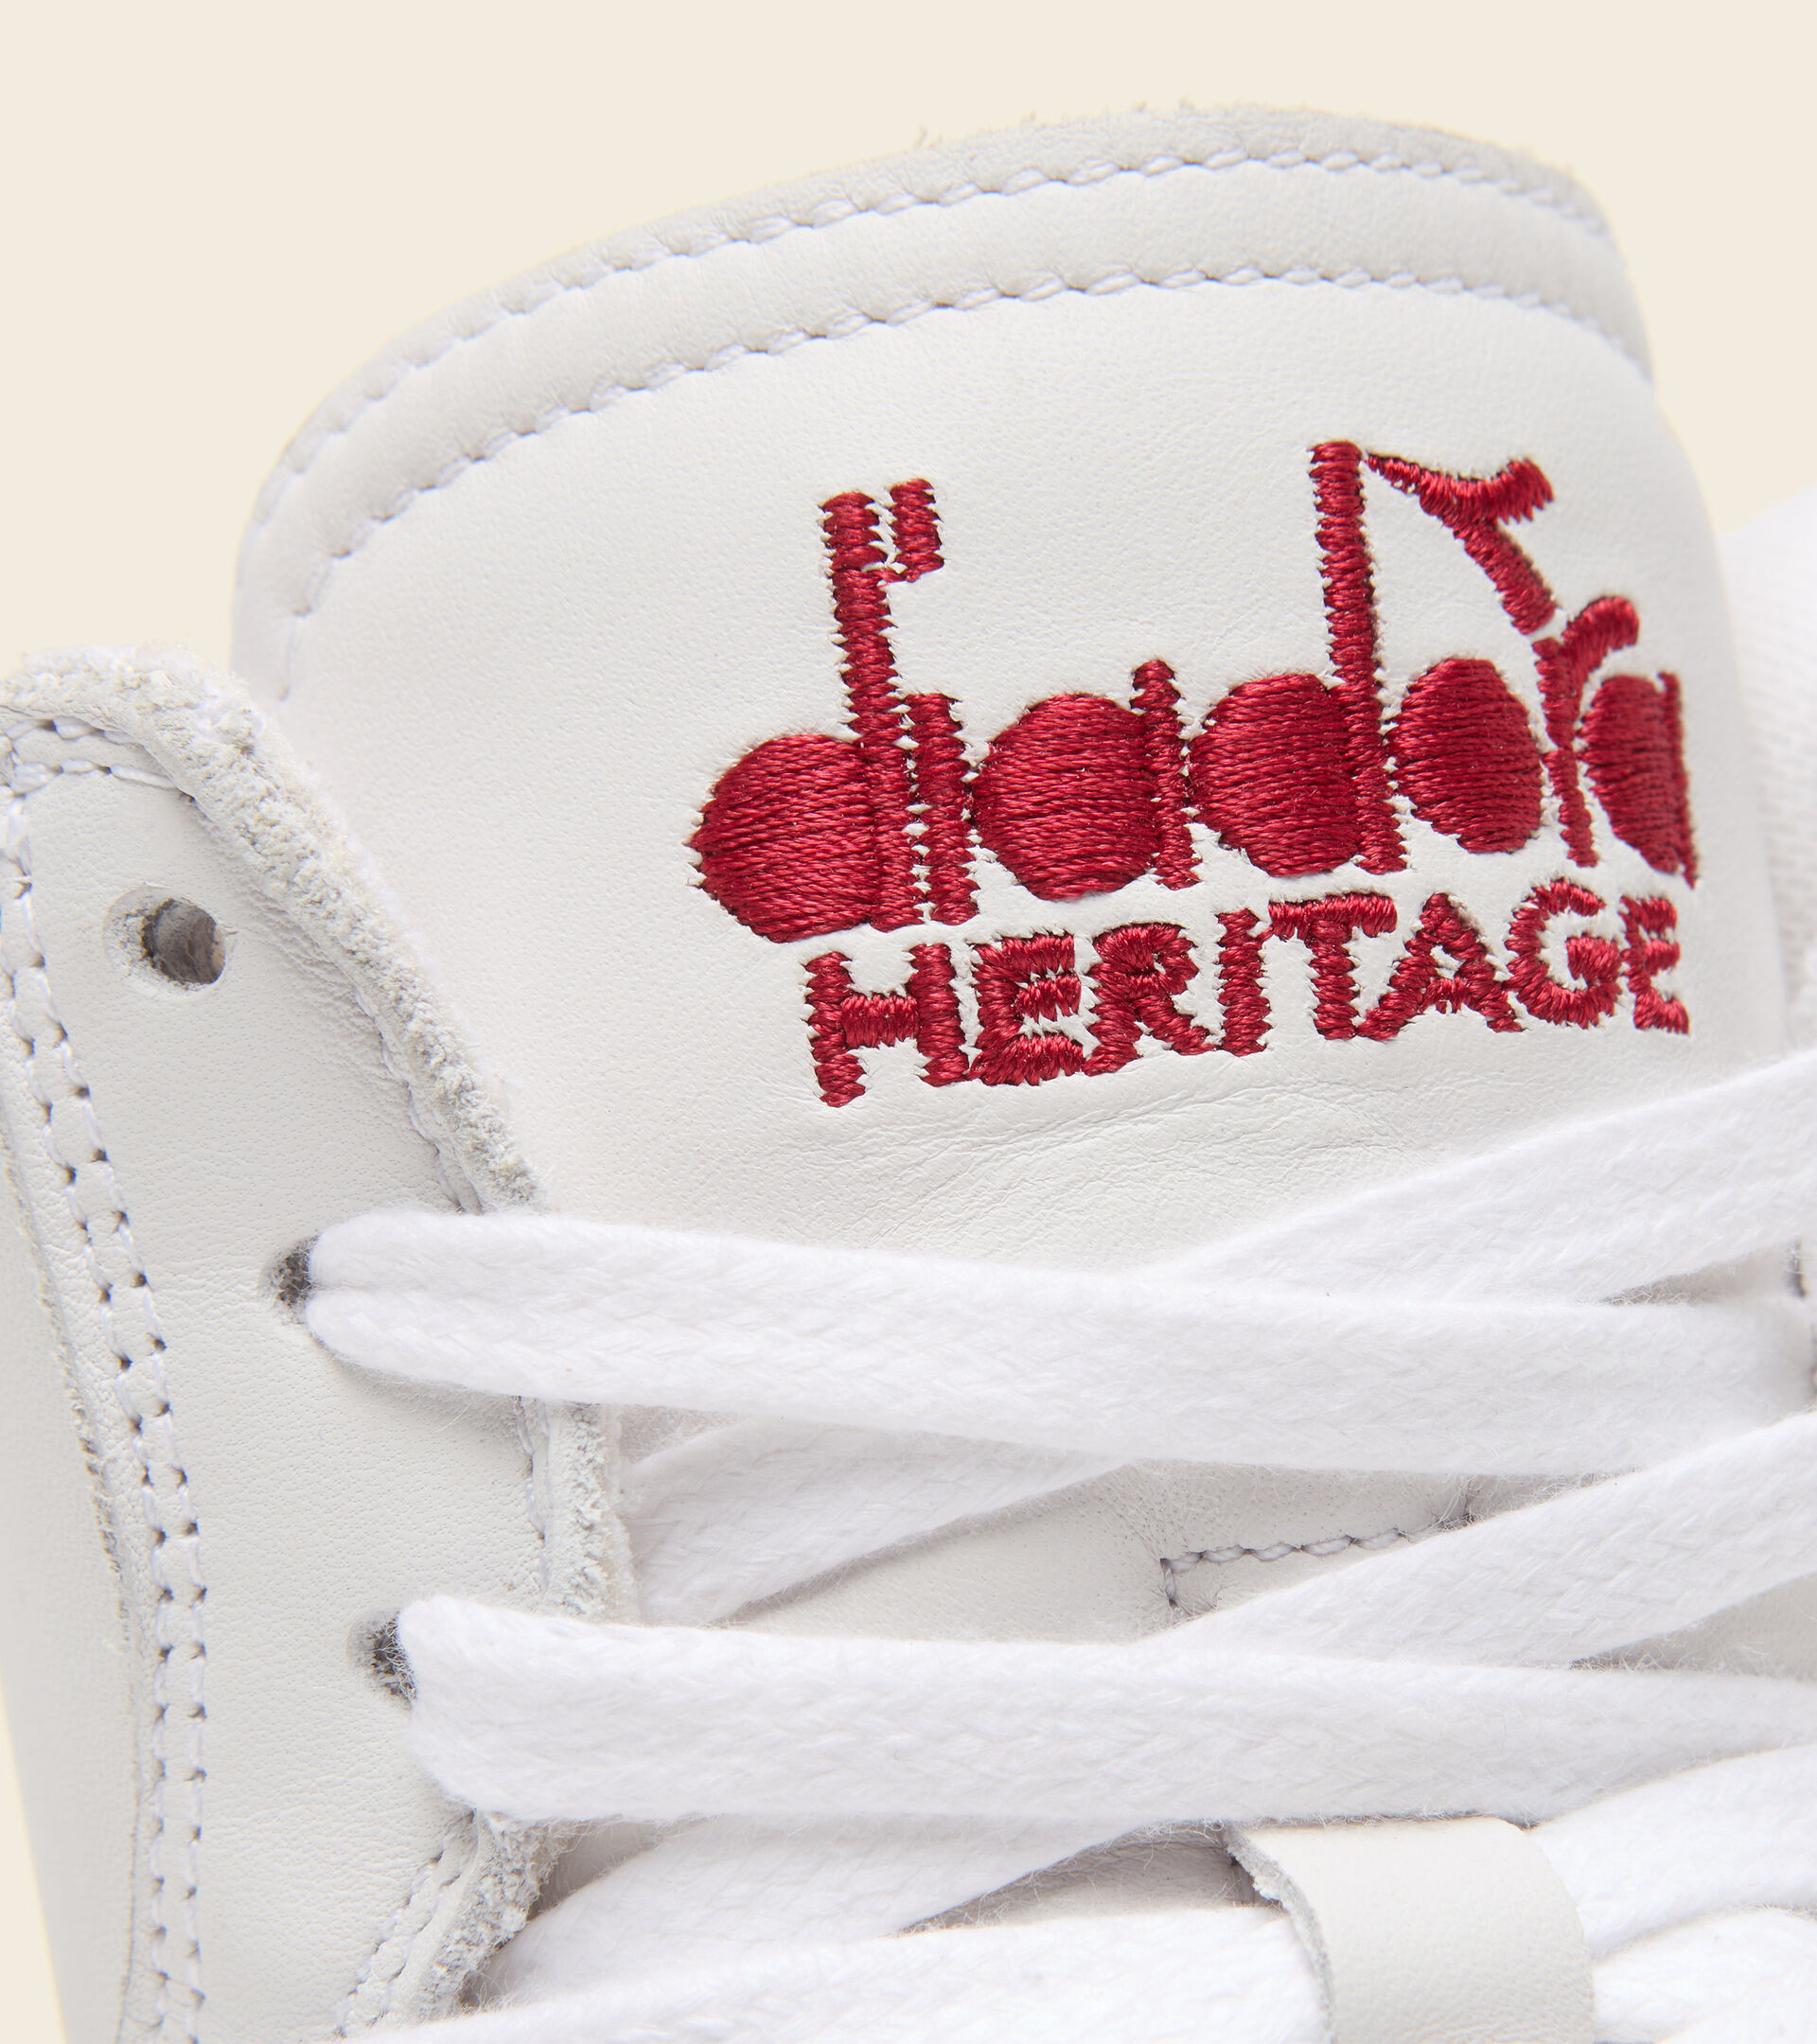 Heritage-Schuh - Unisex MI BASKET USED WEISSE/GRANAT - Diadora